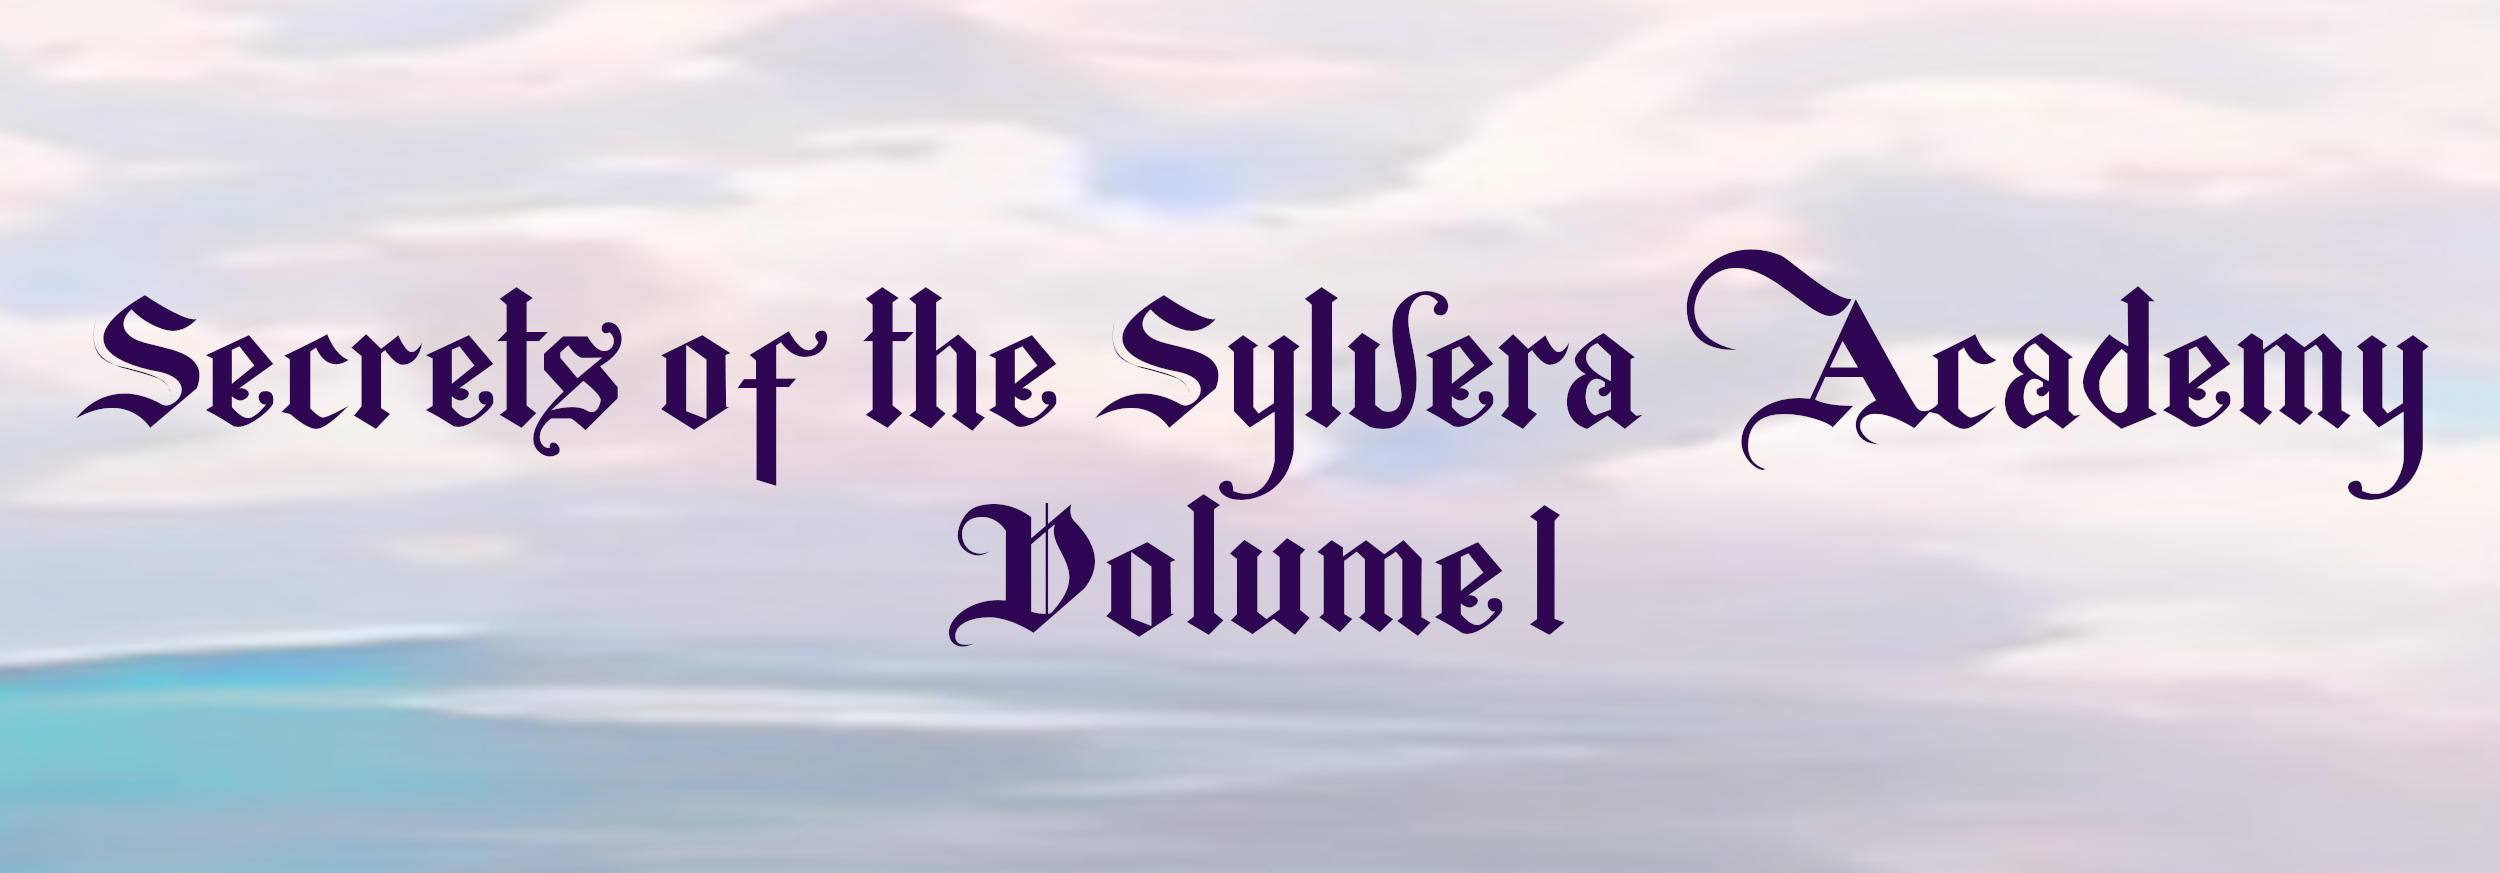 Secrets of Sylvera Academy Volume I